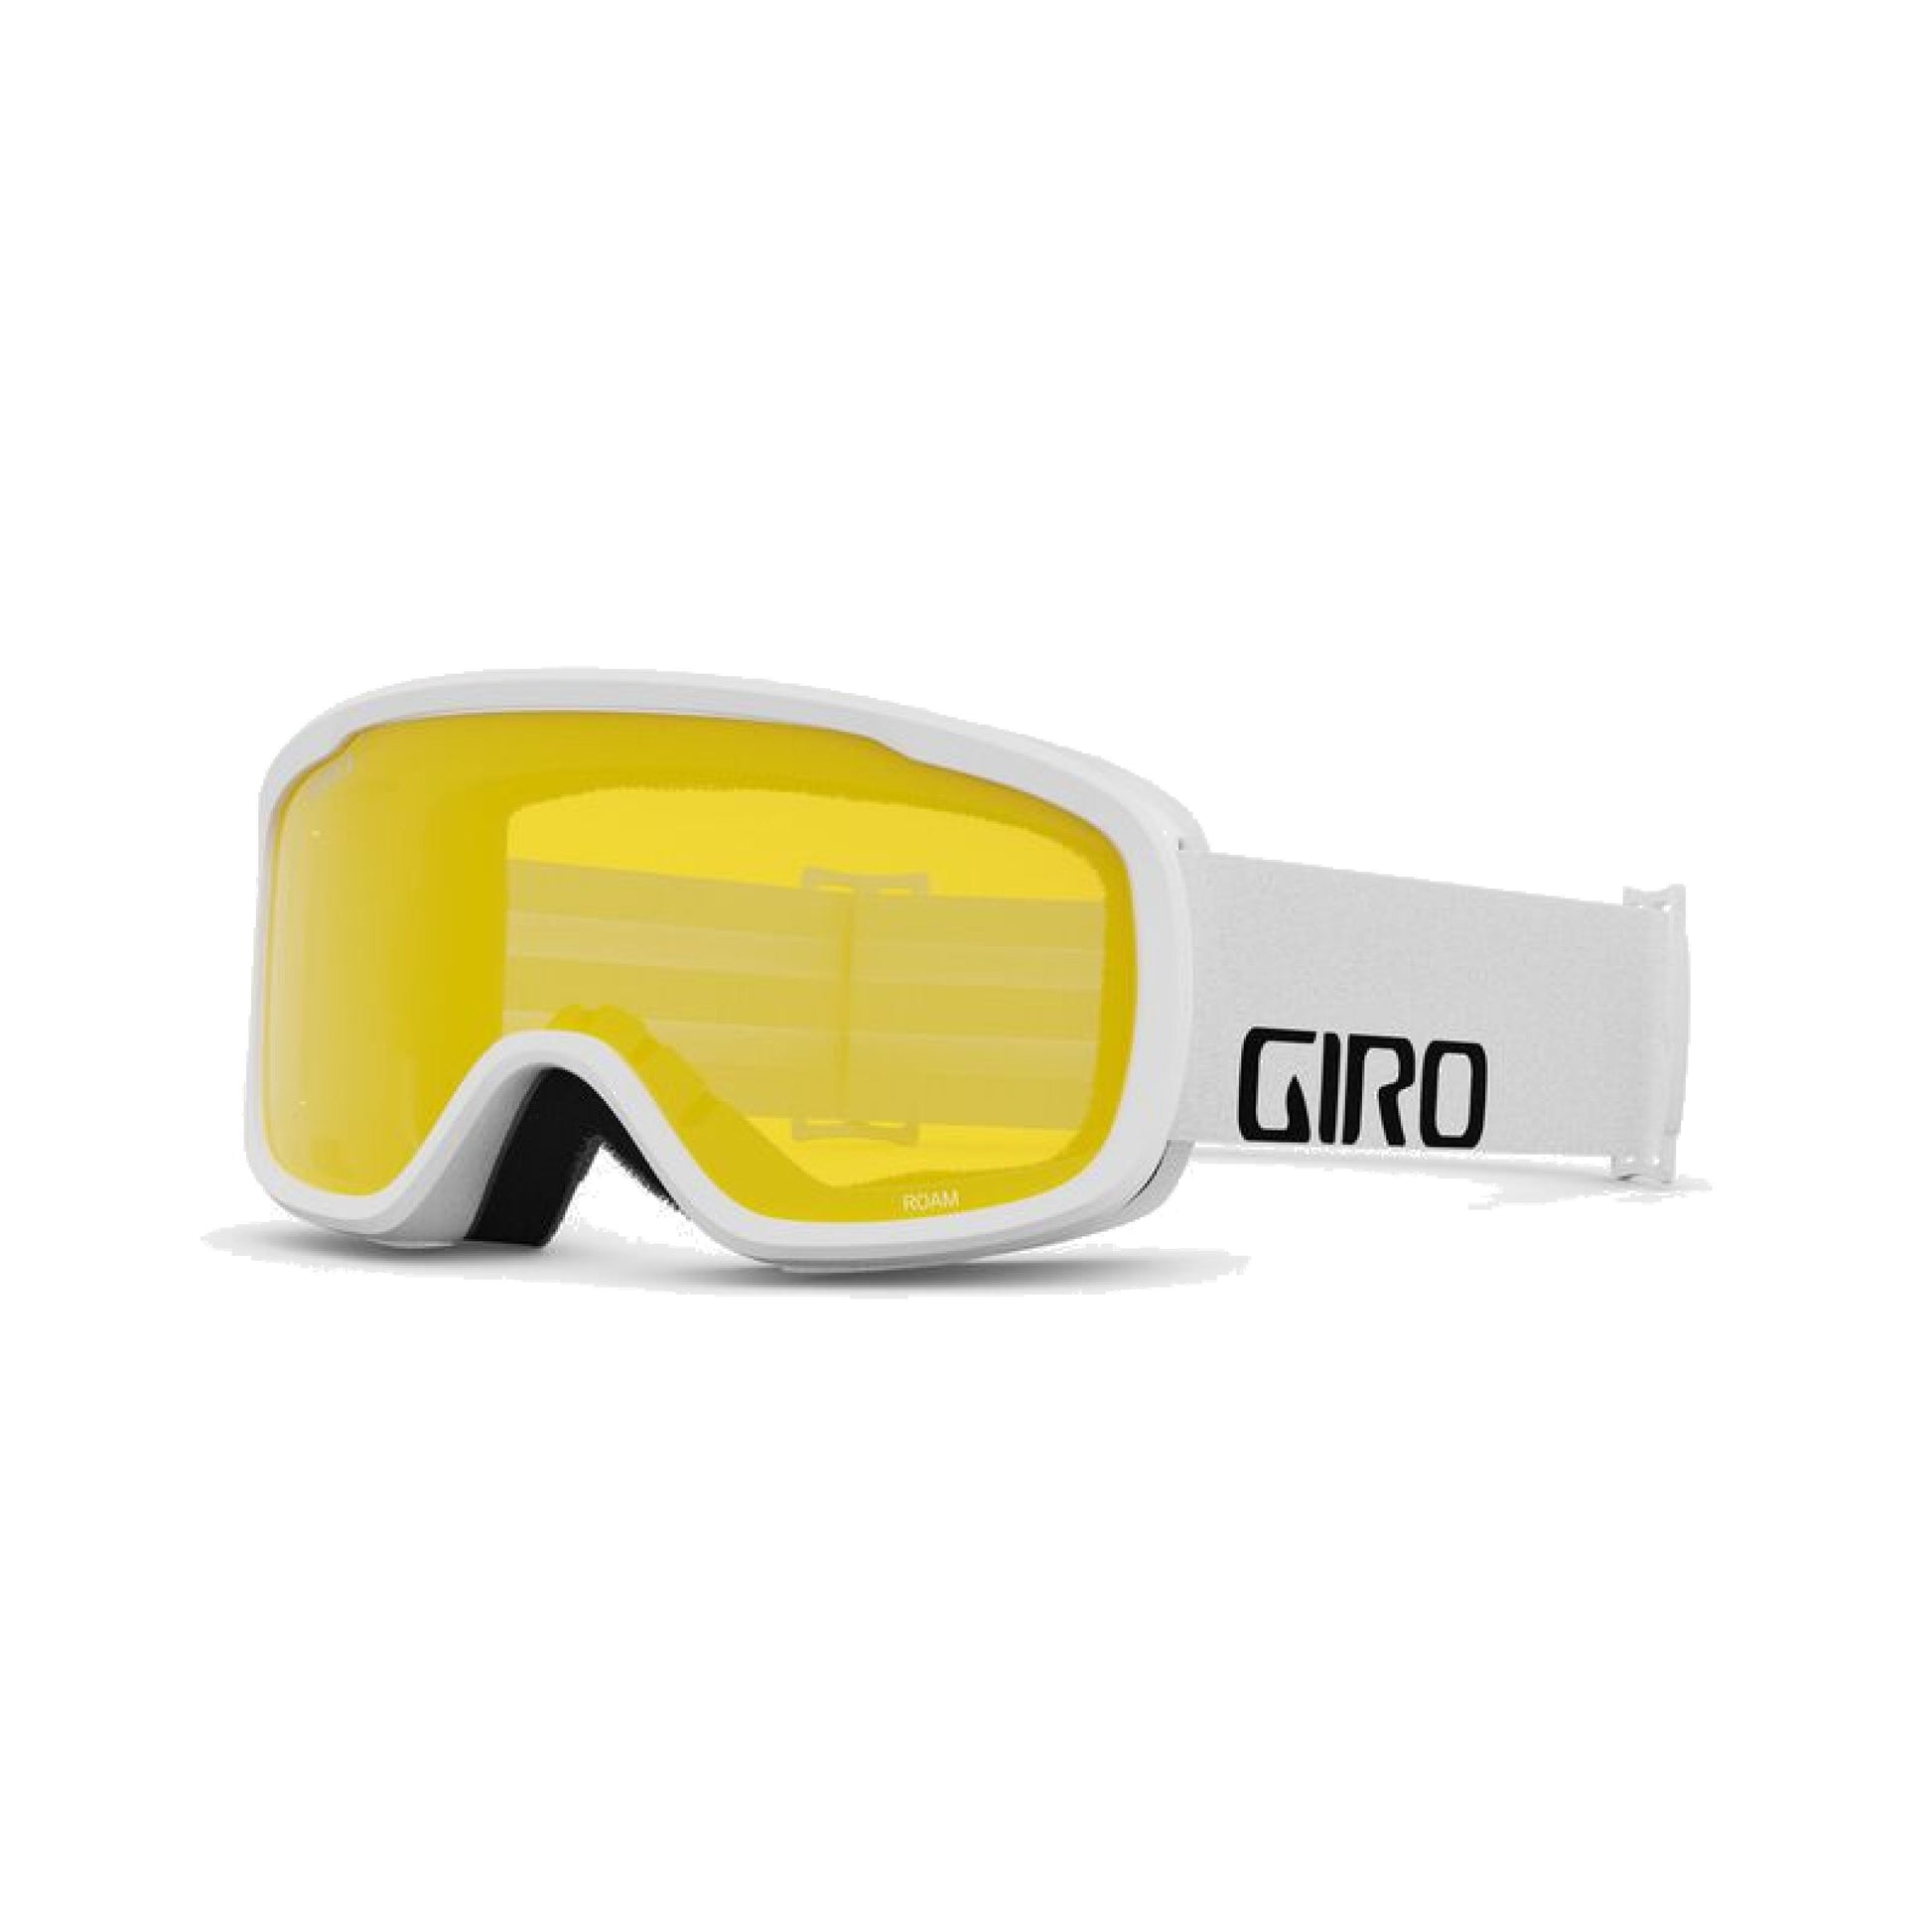 Giro Roam Snow Goggles White Wordmark Loden Green Snow Goggles